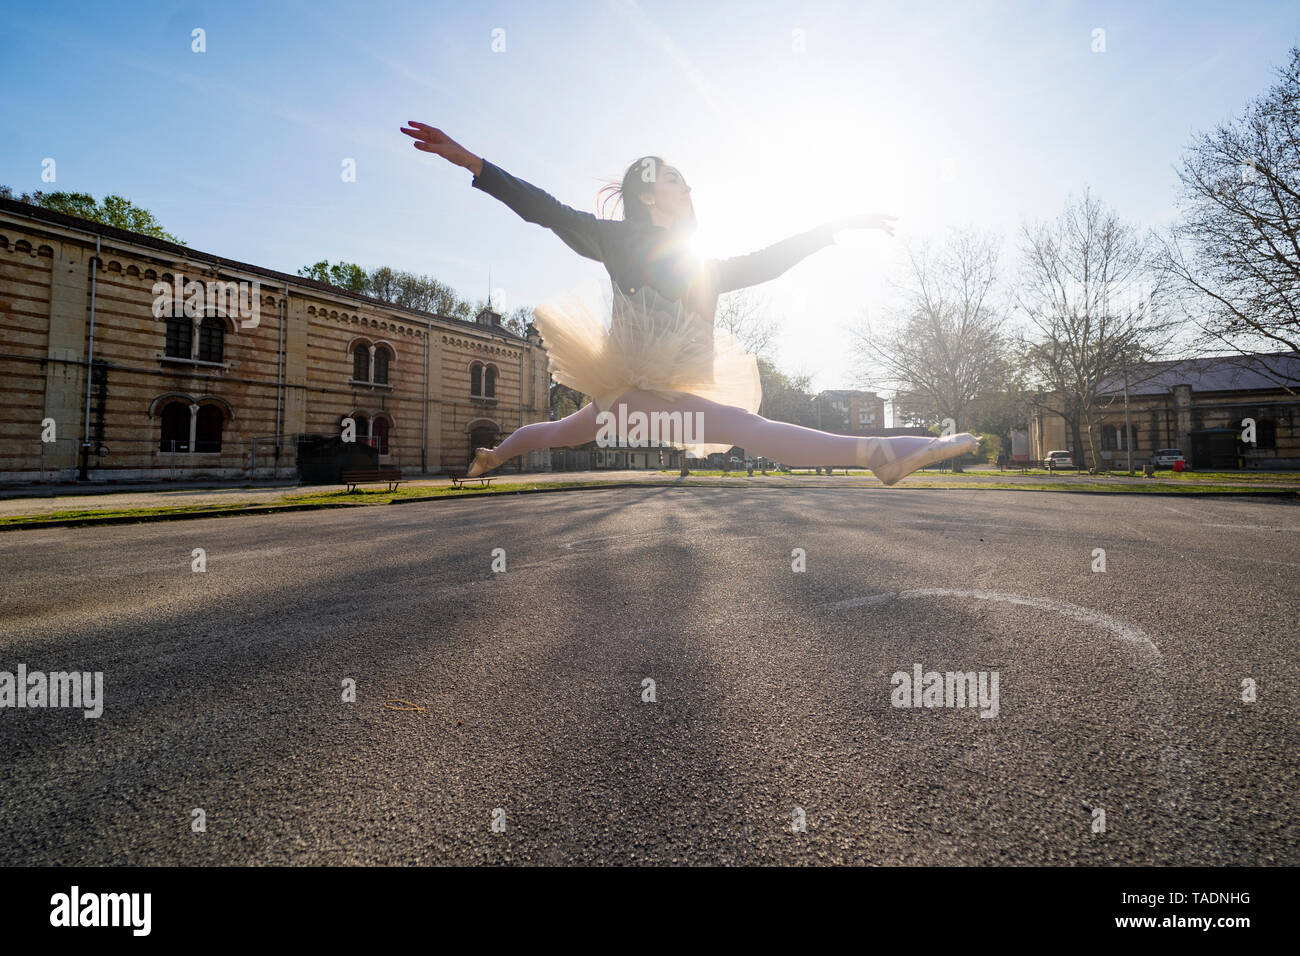 Italy, Verona, Ballerina dancing in the city jumping midair Stock Photo